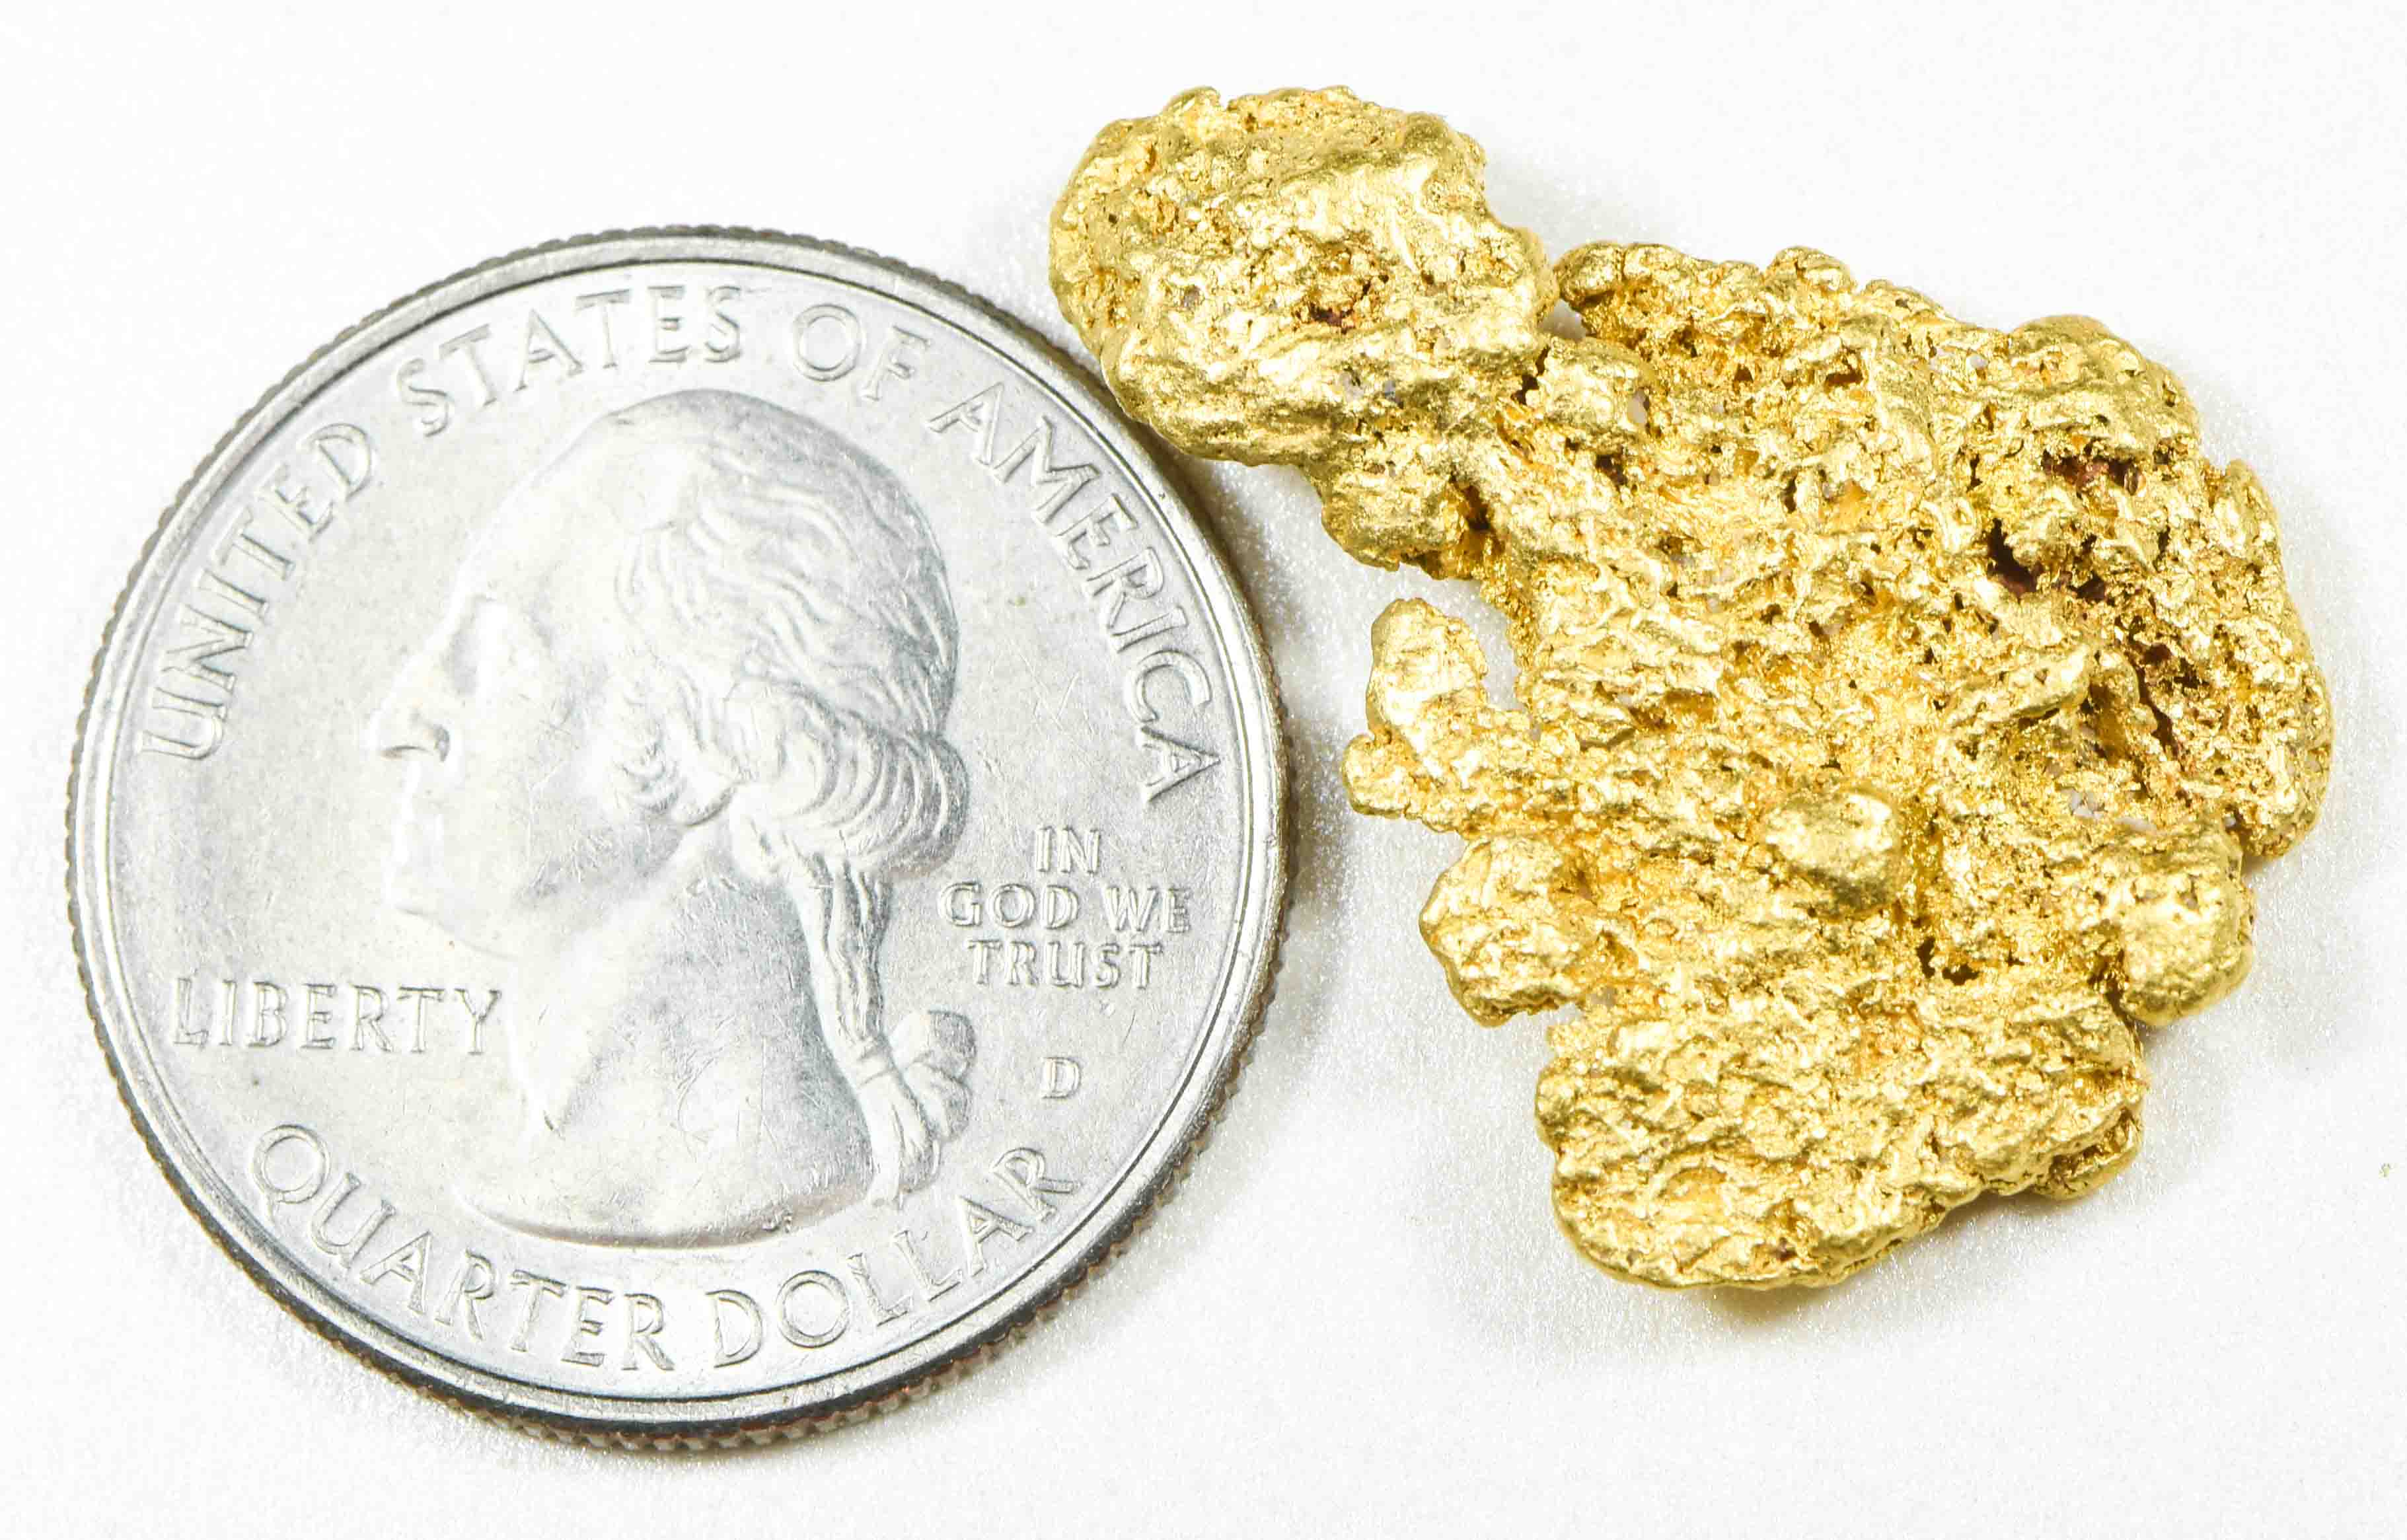 #1120 Natural Gold Nugget Australian 7.67 Grams Genuine